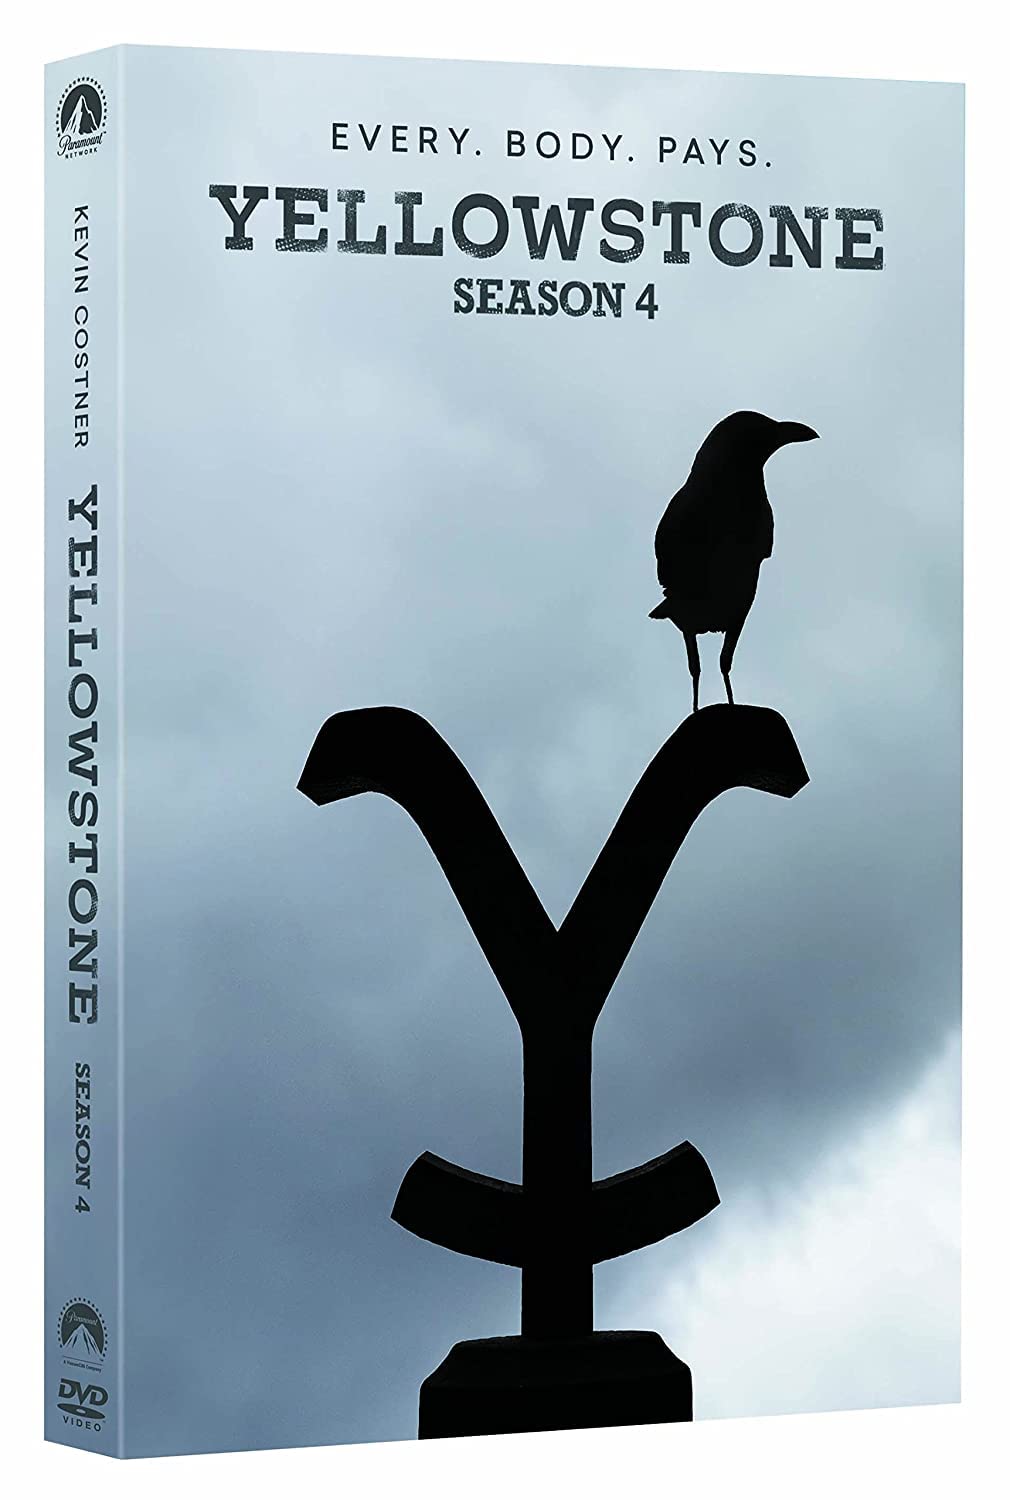 Yellowstone Season 4, DVD